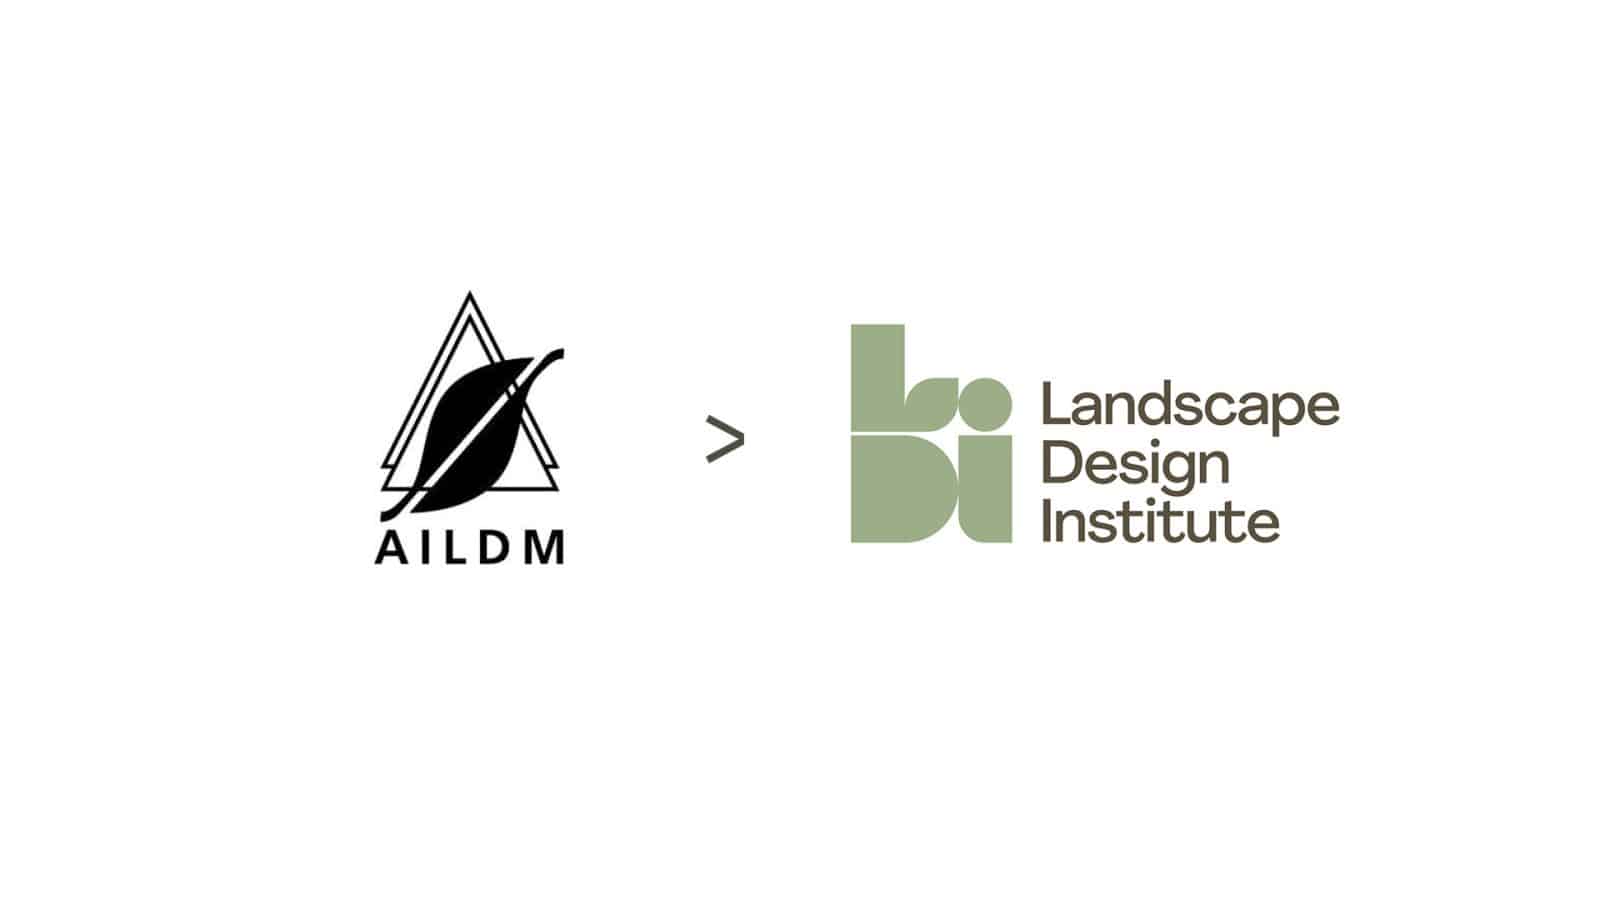 Landscape Design Institute - Brand Strategy and Design